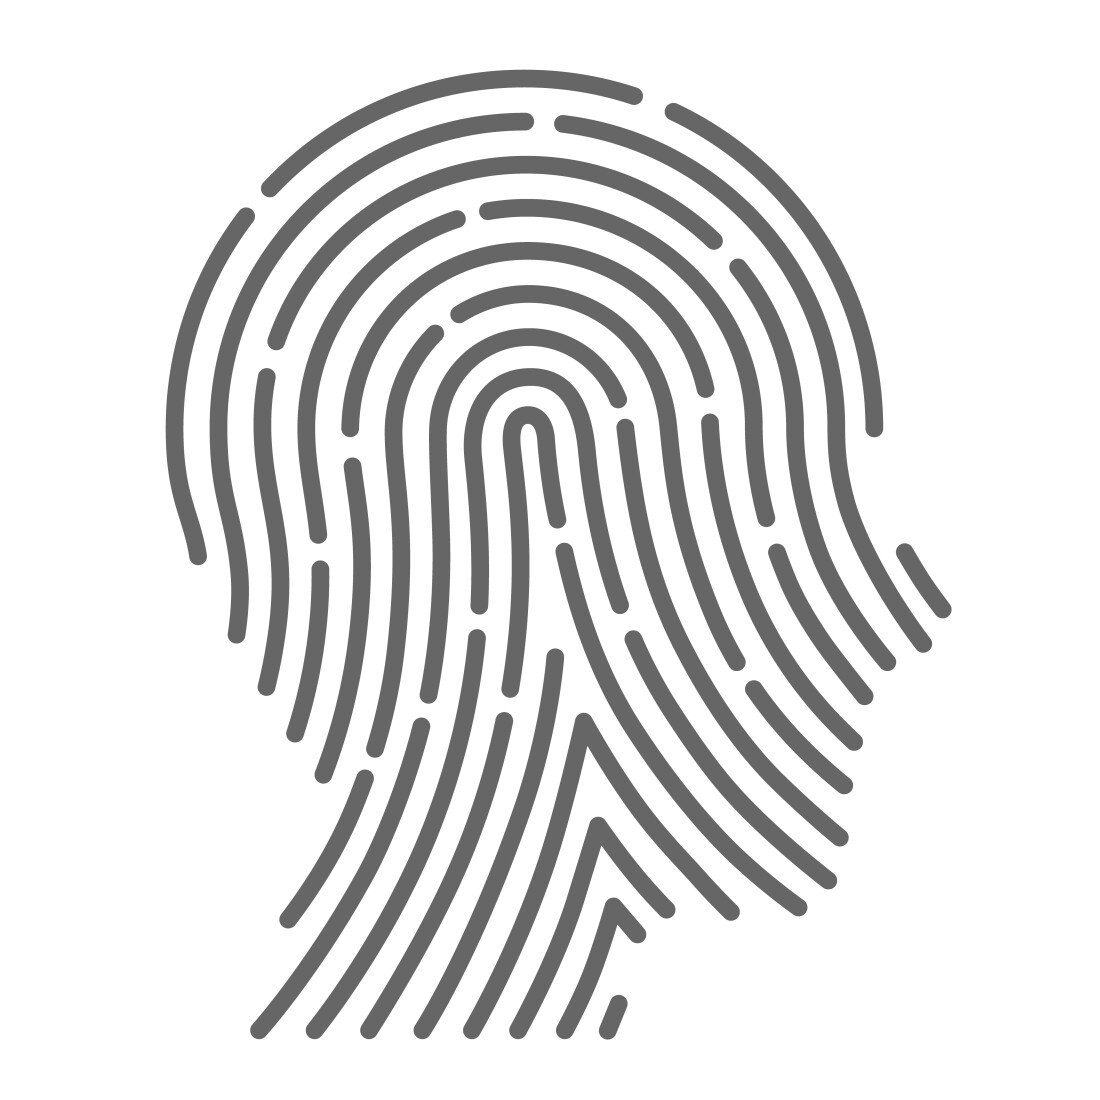 Fingerprint shaped like the profile of a head